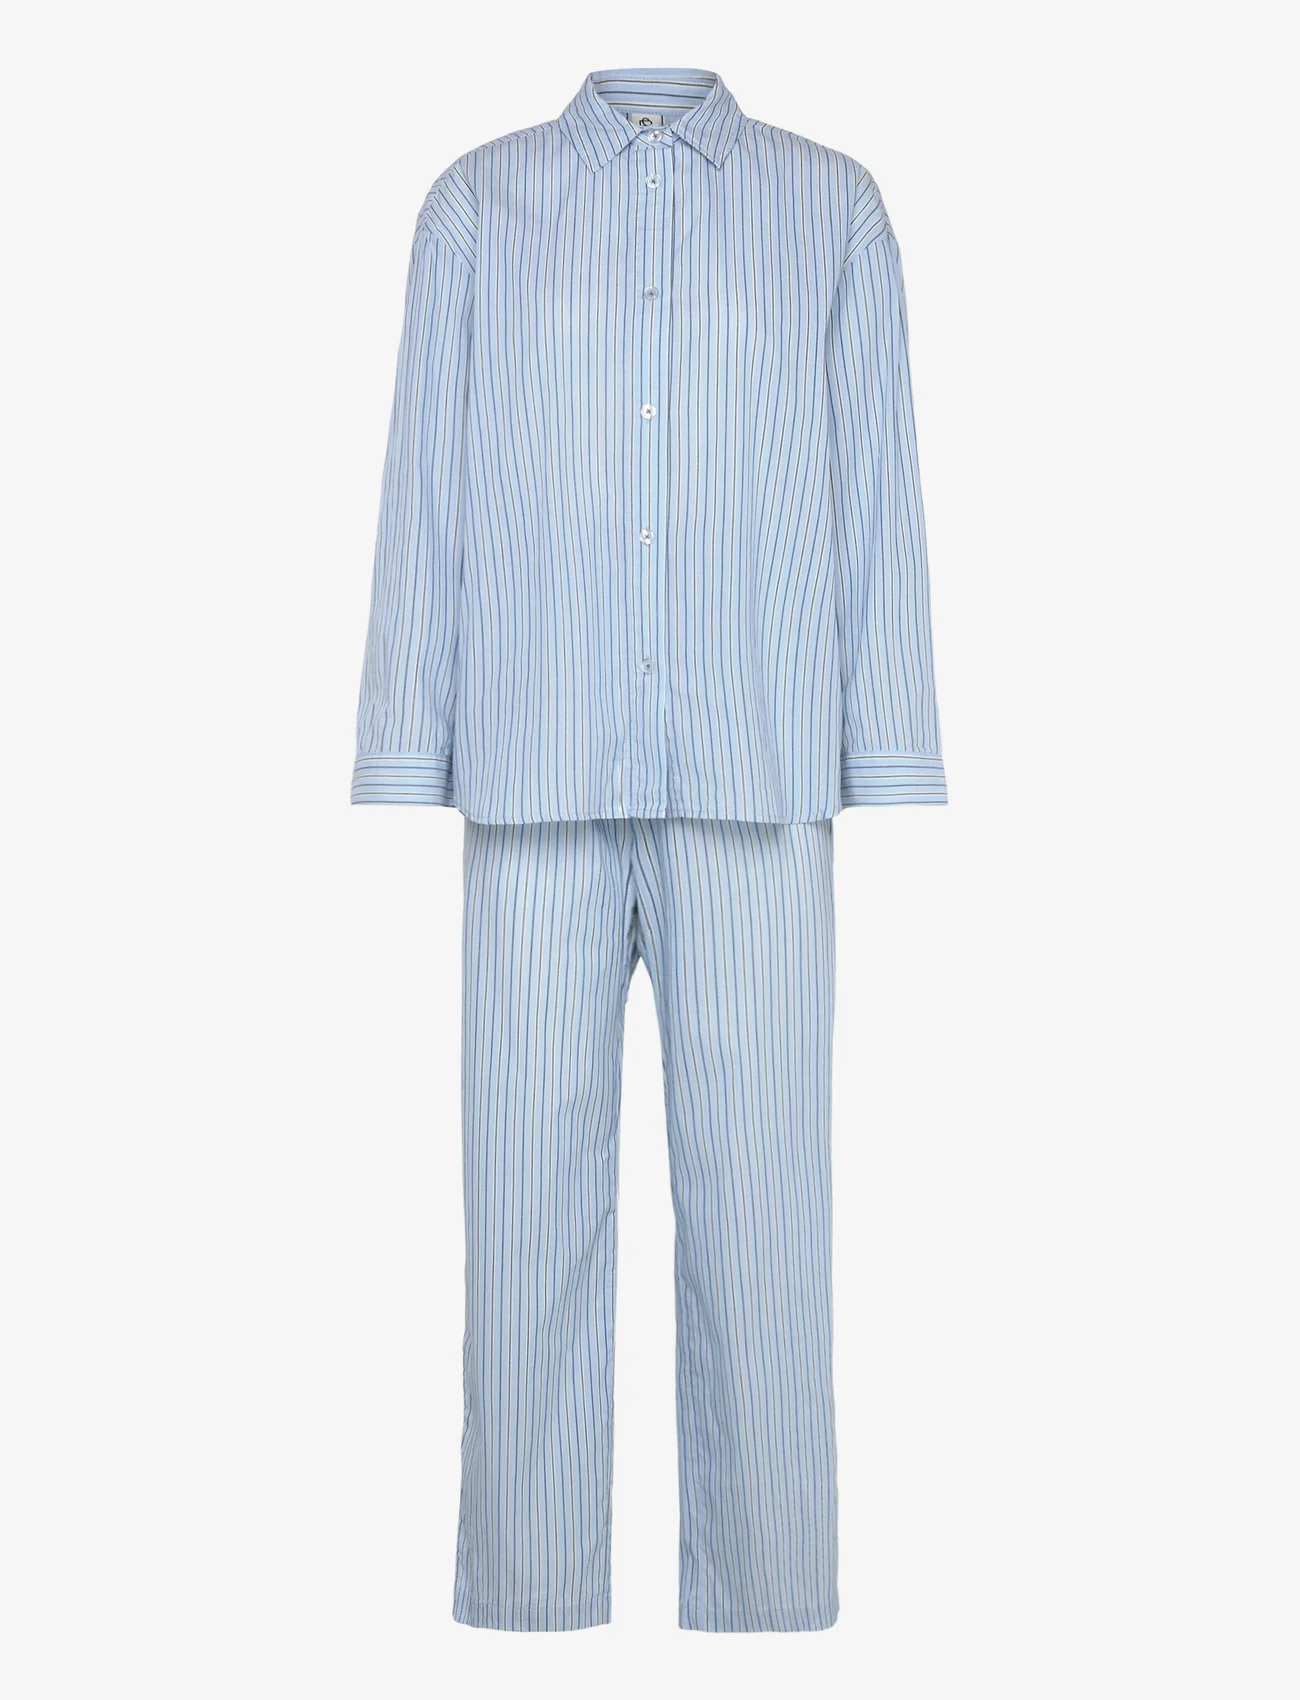 Becksöndergaard - Stripel Pyjamas Set - geburtstagsgeschenke - clear blue sky - 0